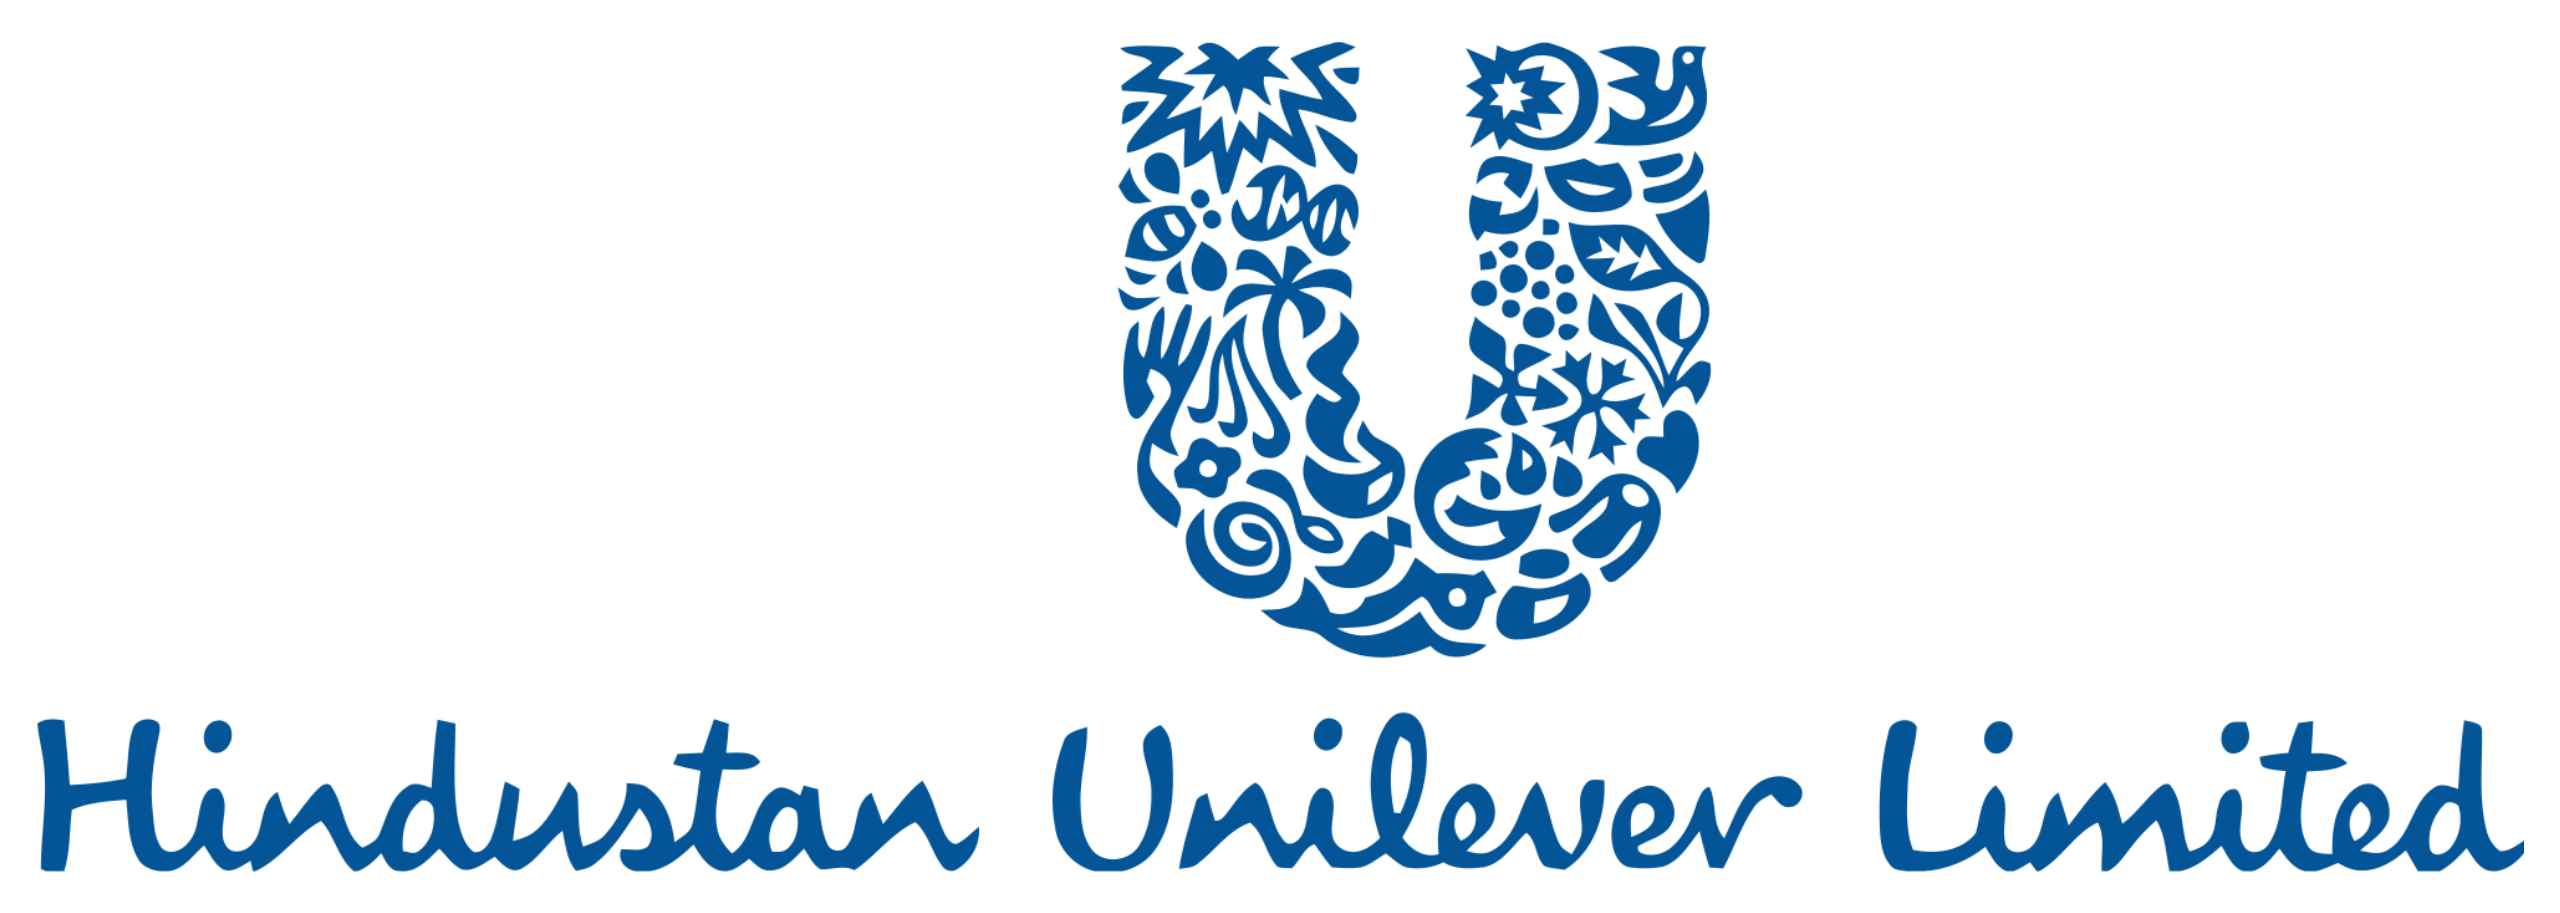 Hindustan Unilever History, Journey & Companies